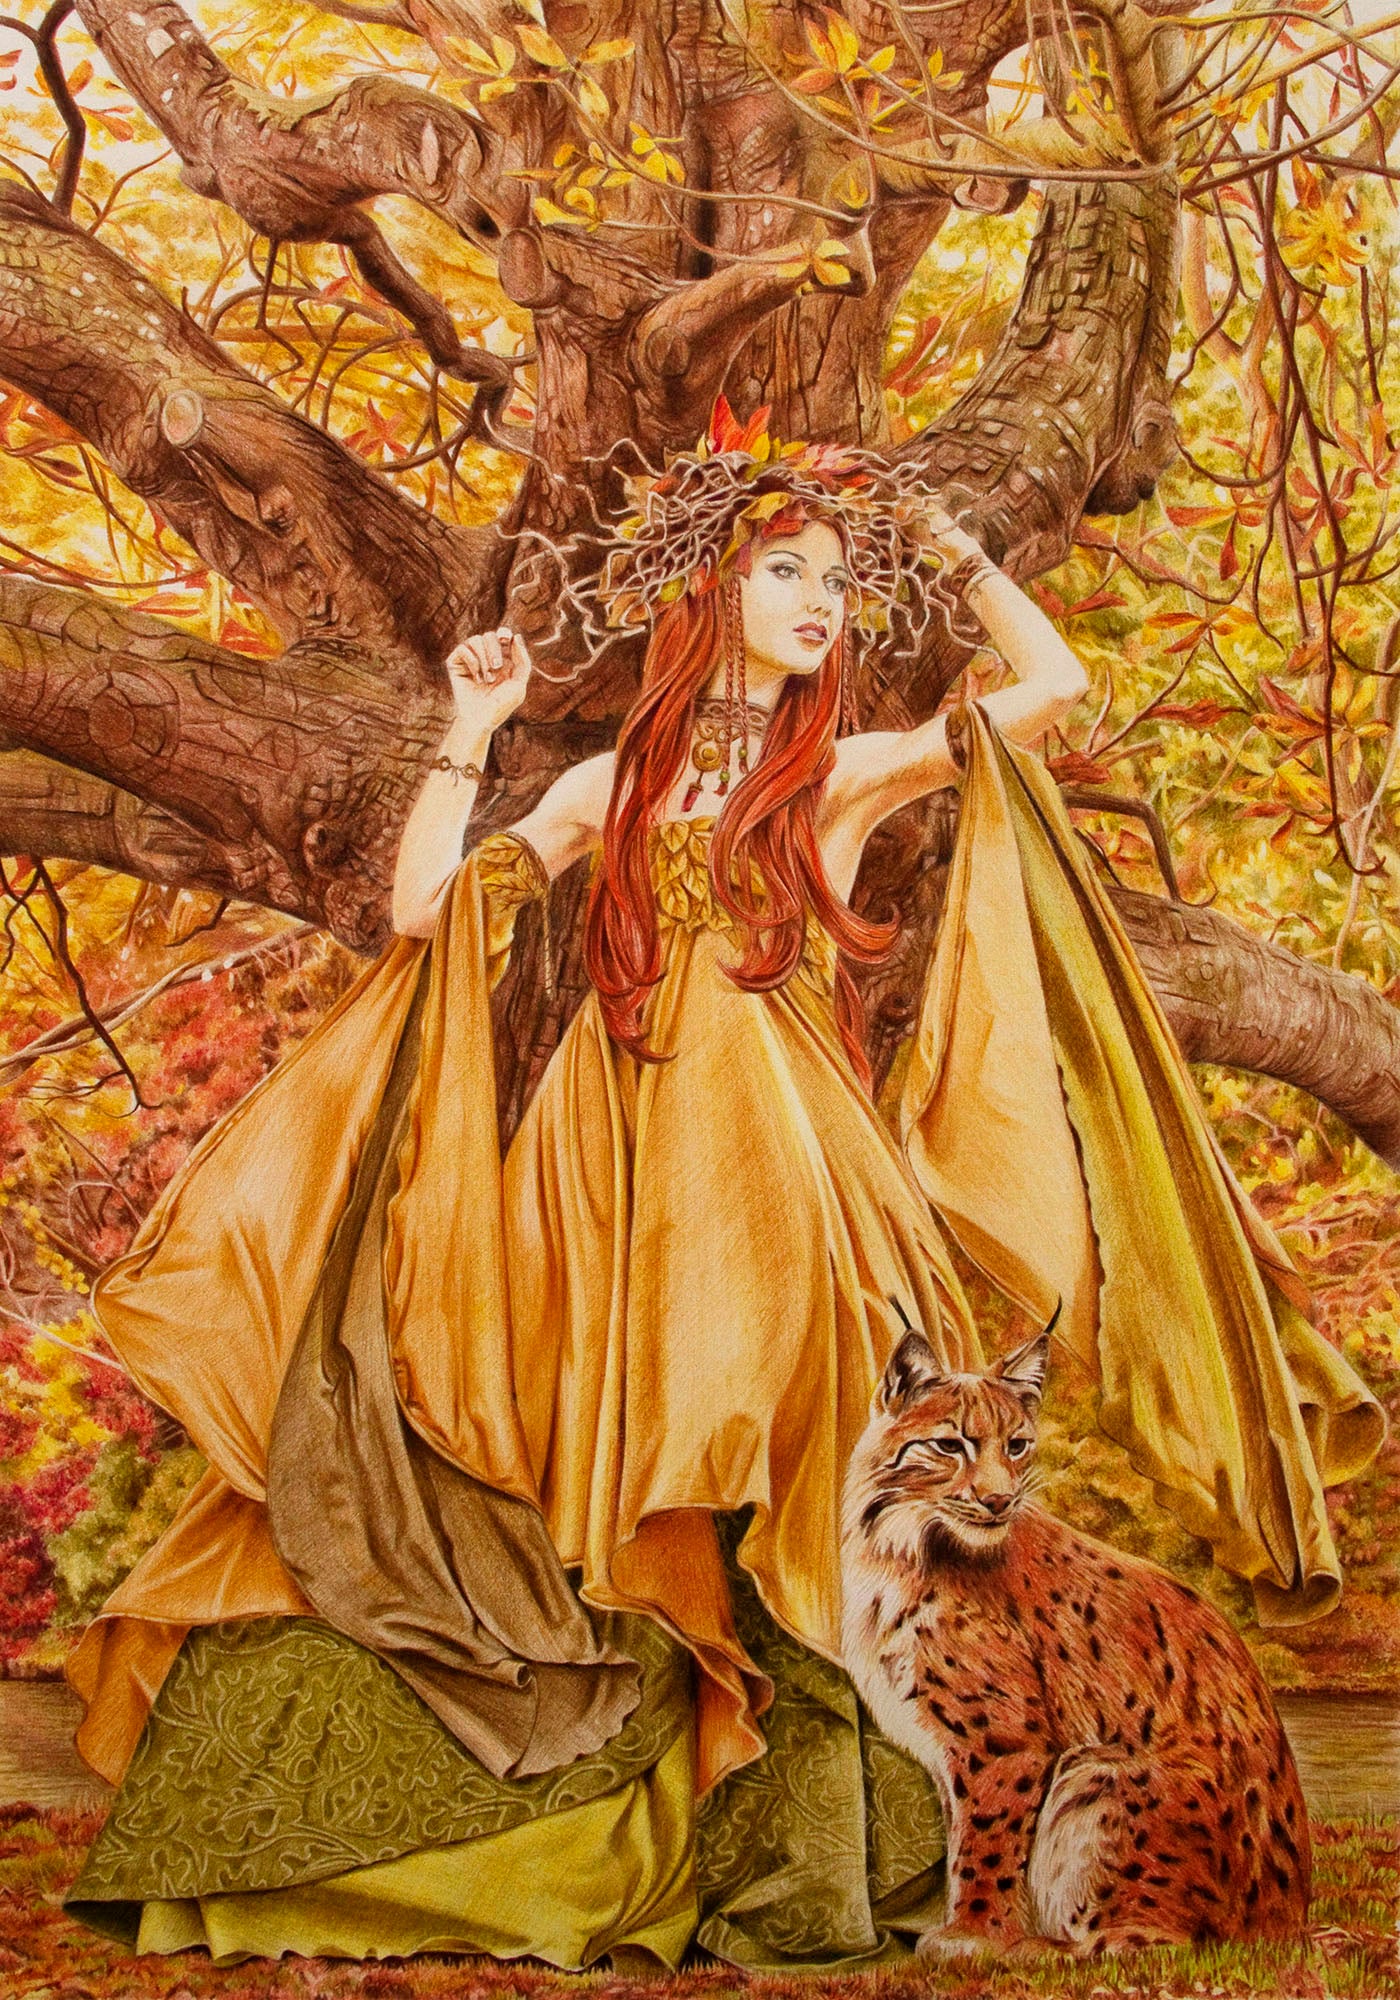 'Autumn Fairy' greeting card